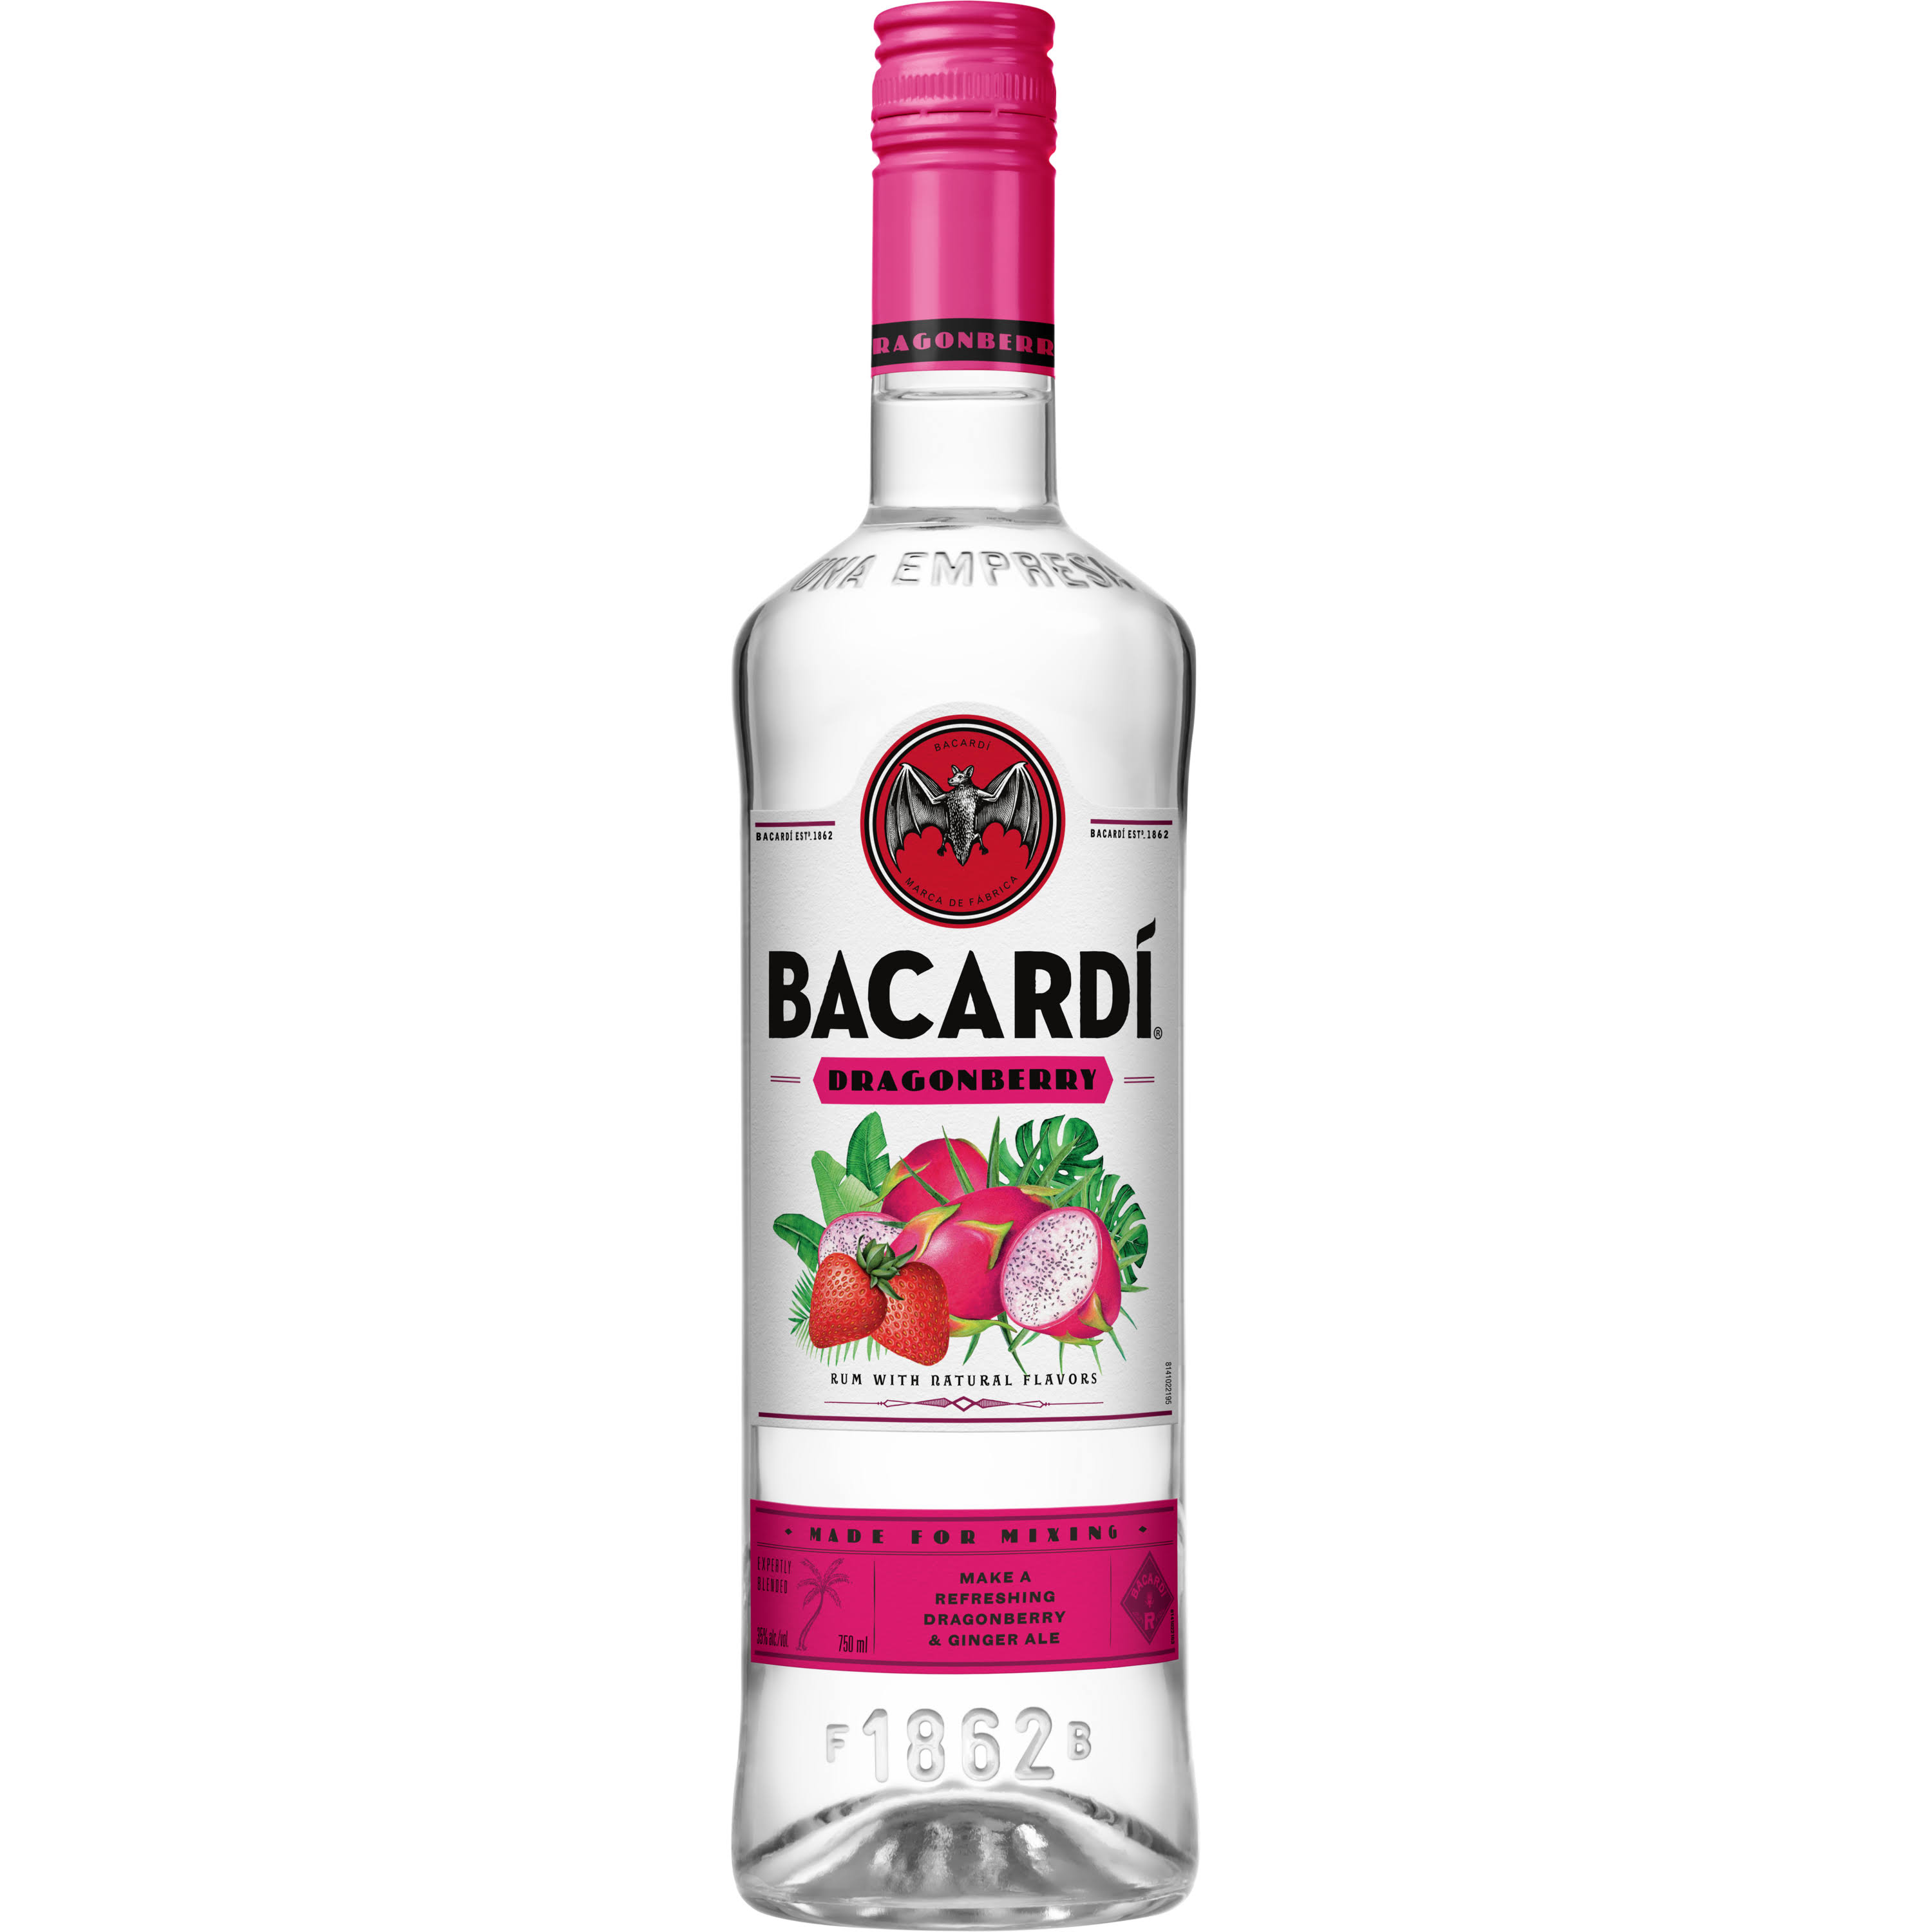 Bacardi Dragon Berry - 750ml